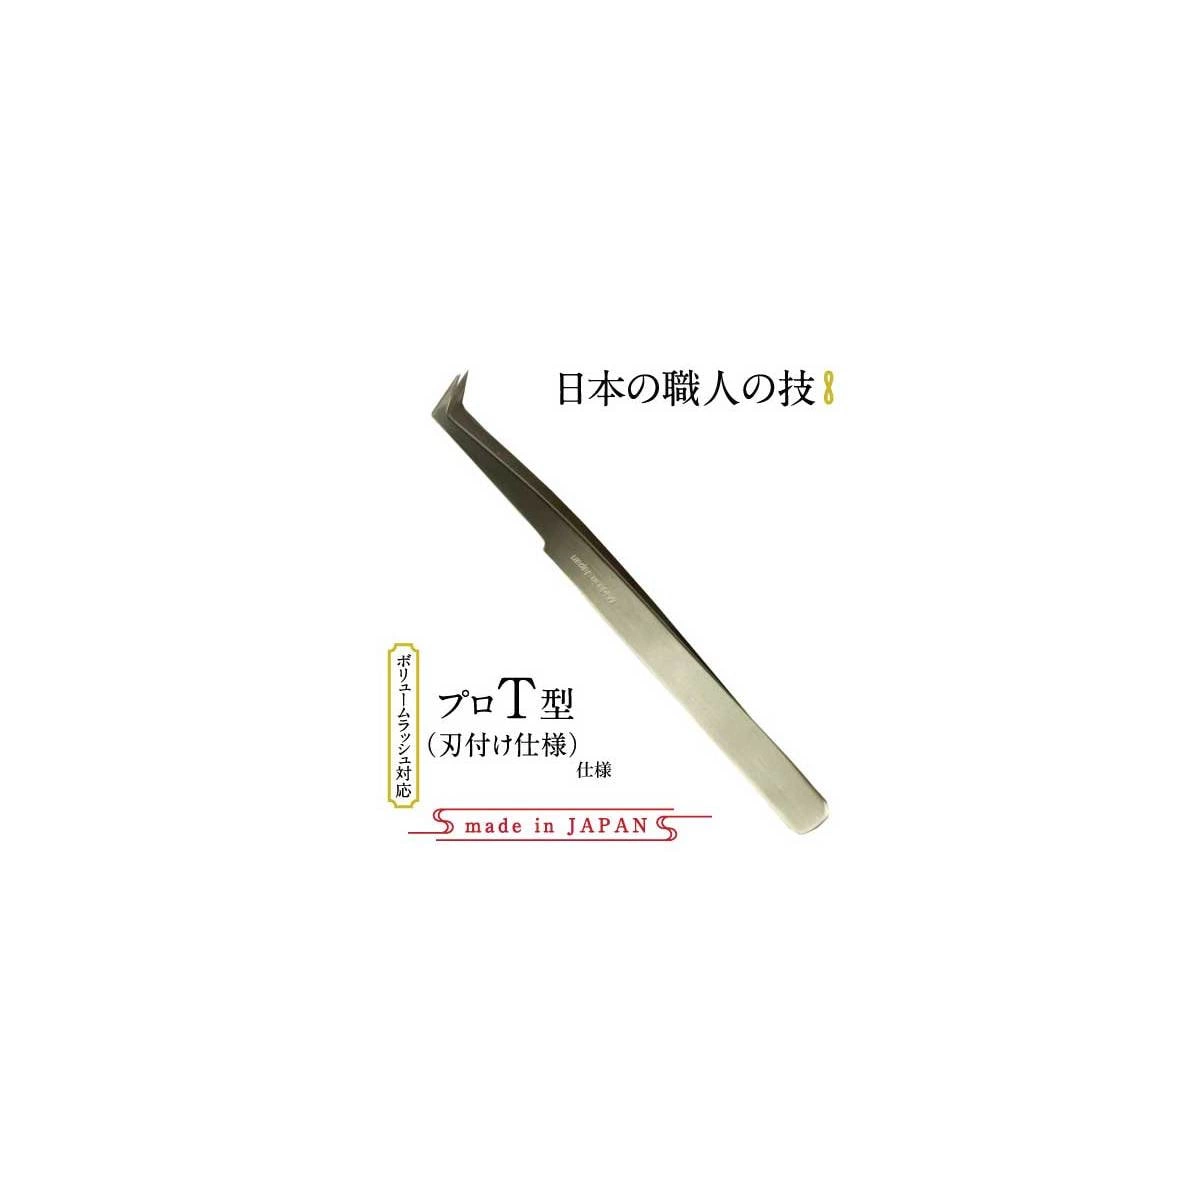 【tecnico】日本製高級ステンレスツイーザー プロT型(長さ12.6cm)(pin15)